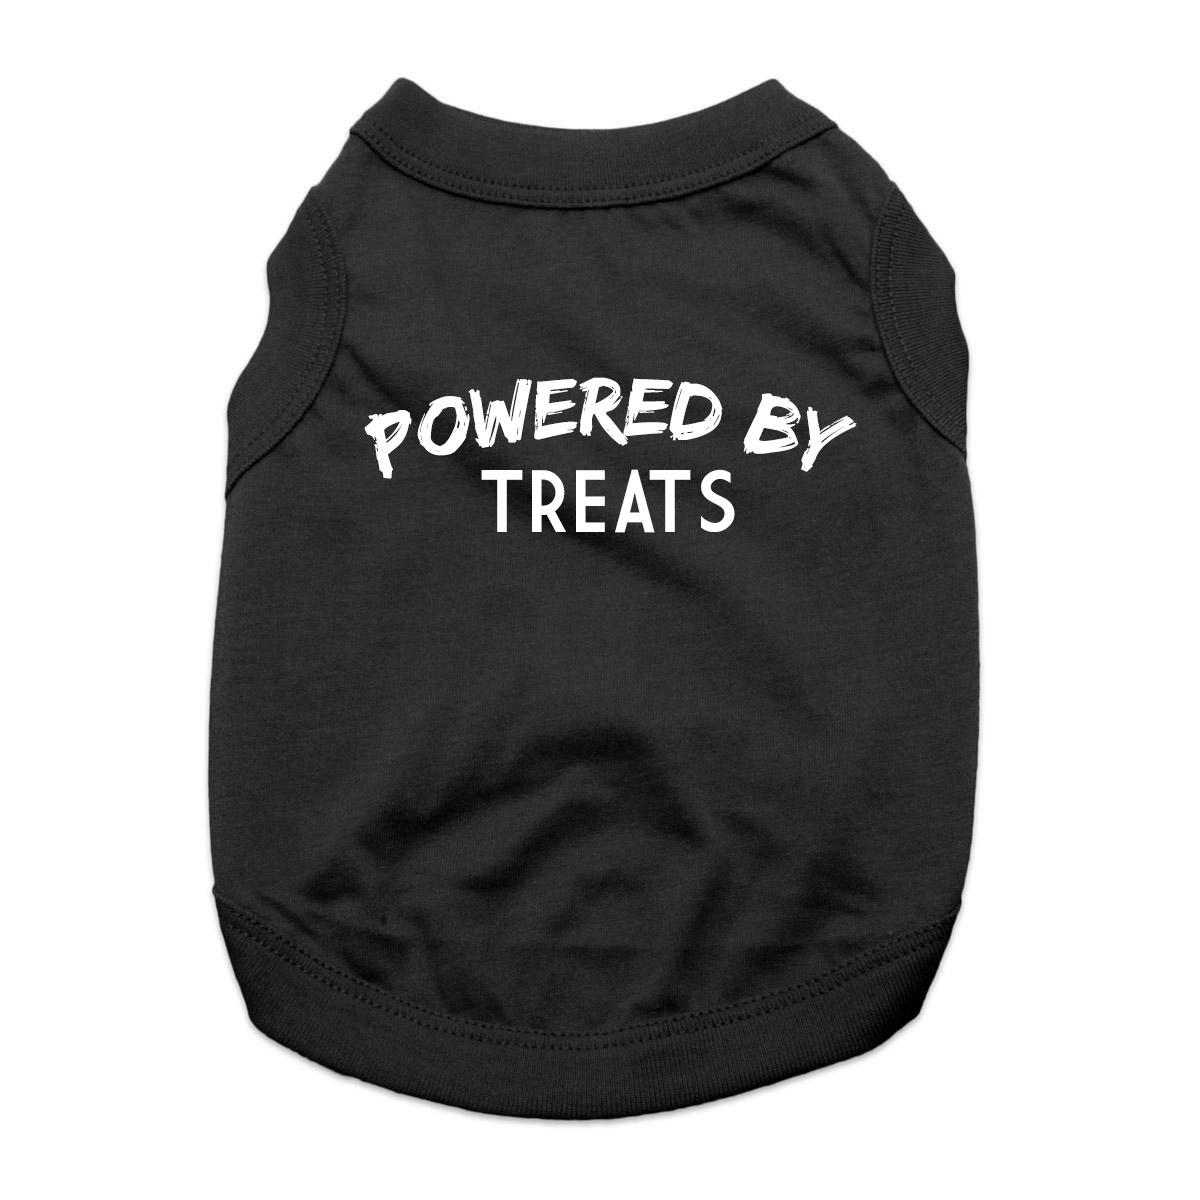 Powered by Treats Dog Shirt - Black